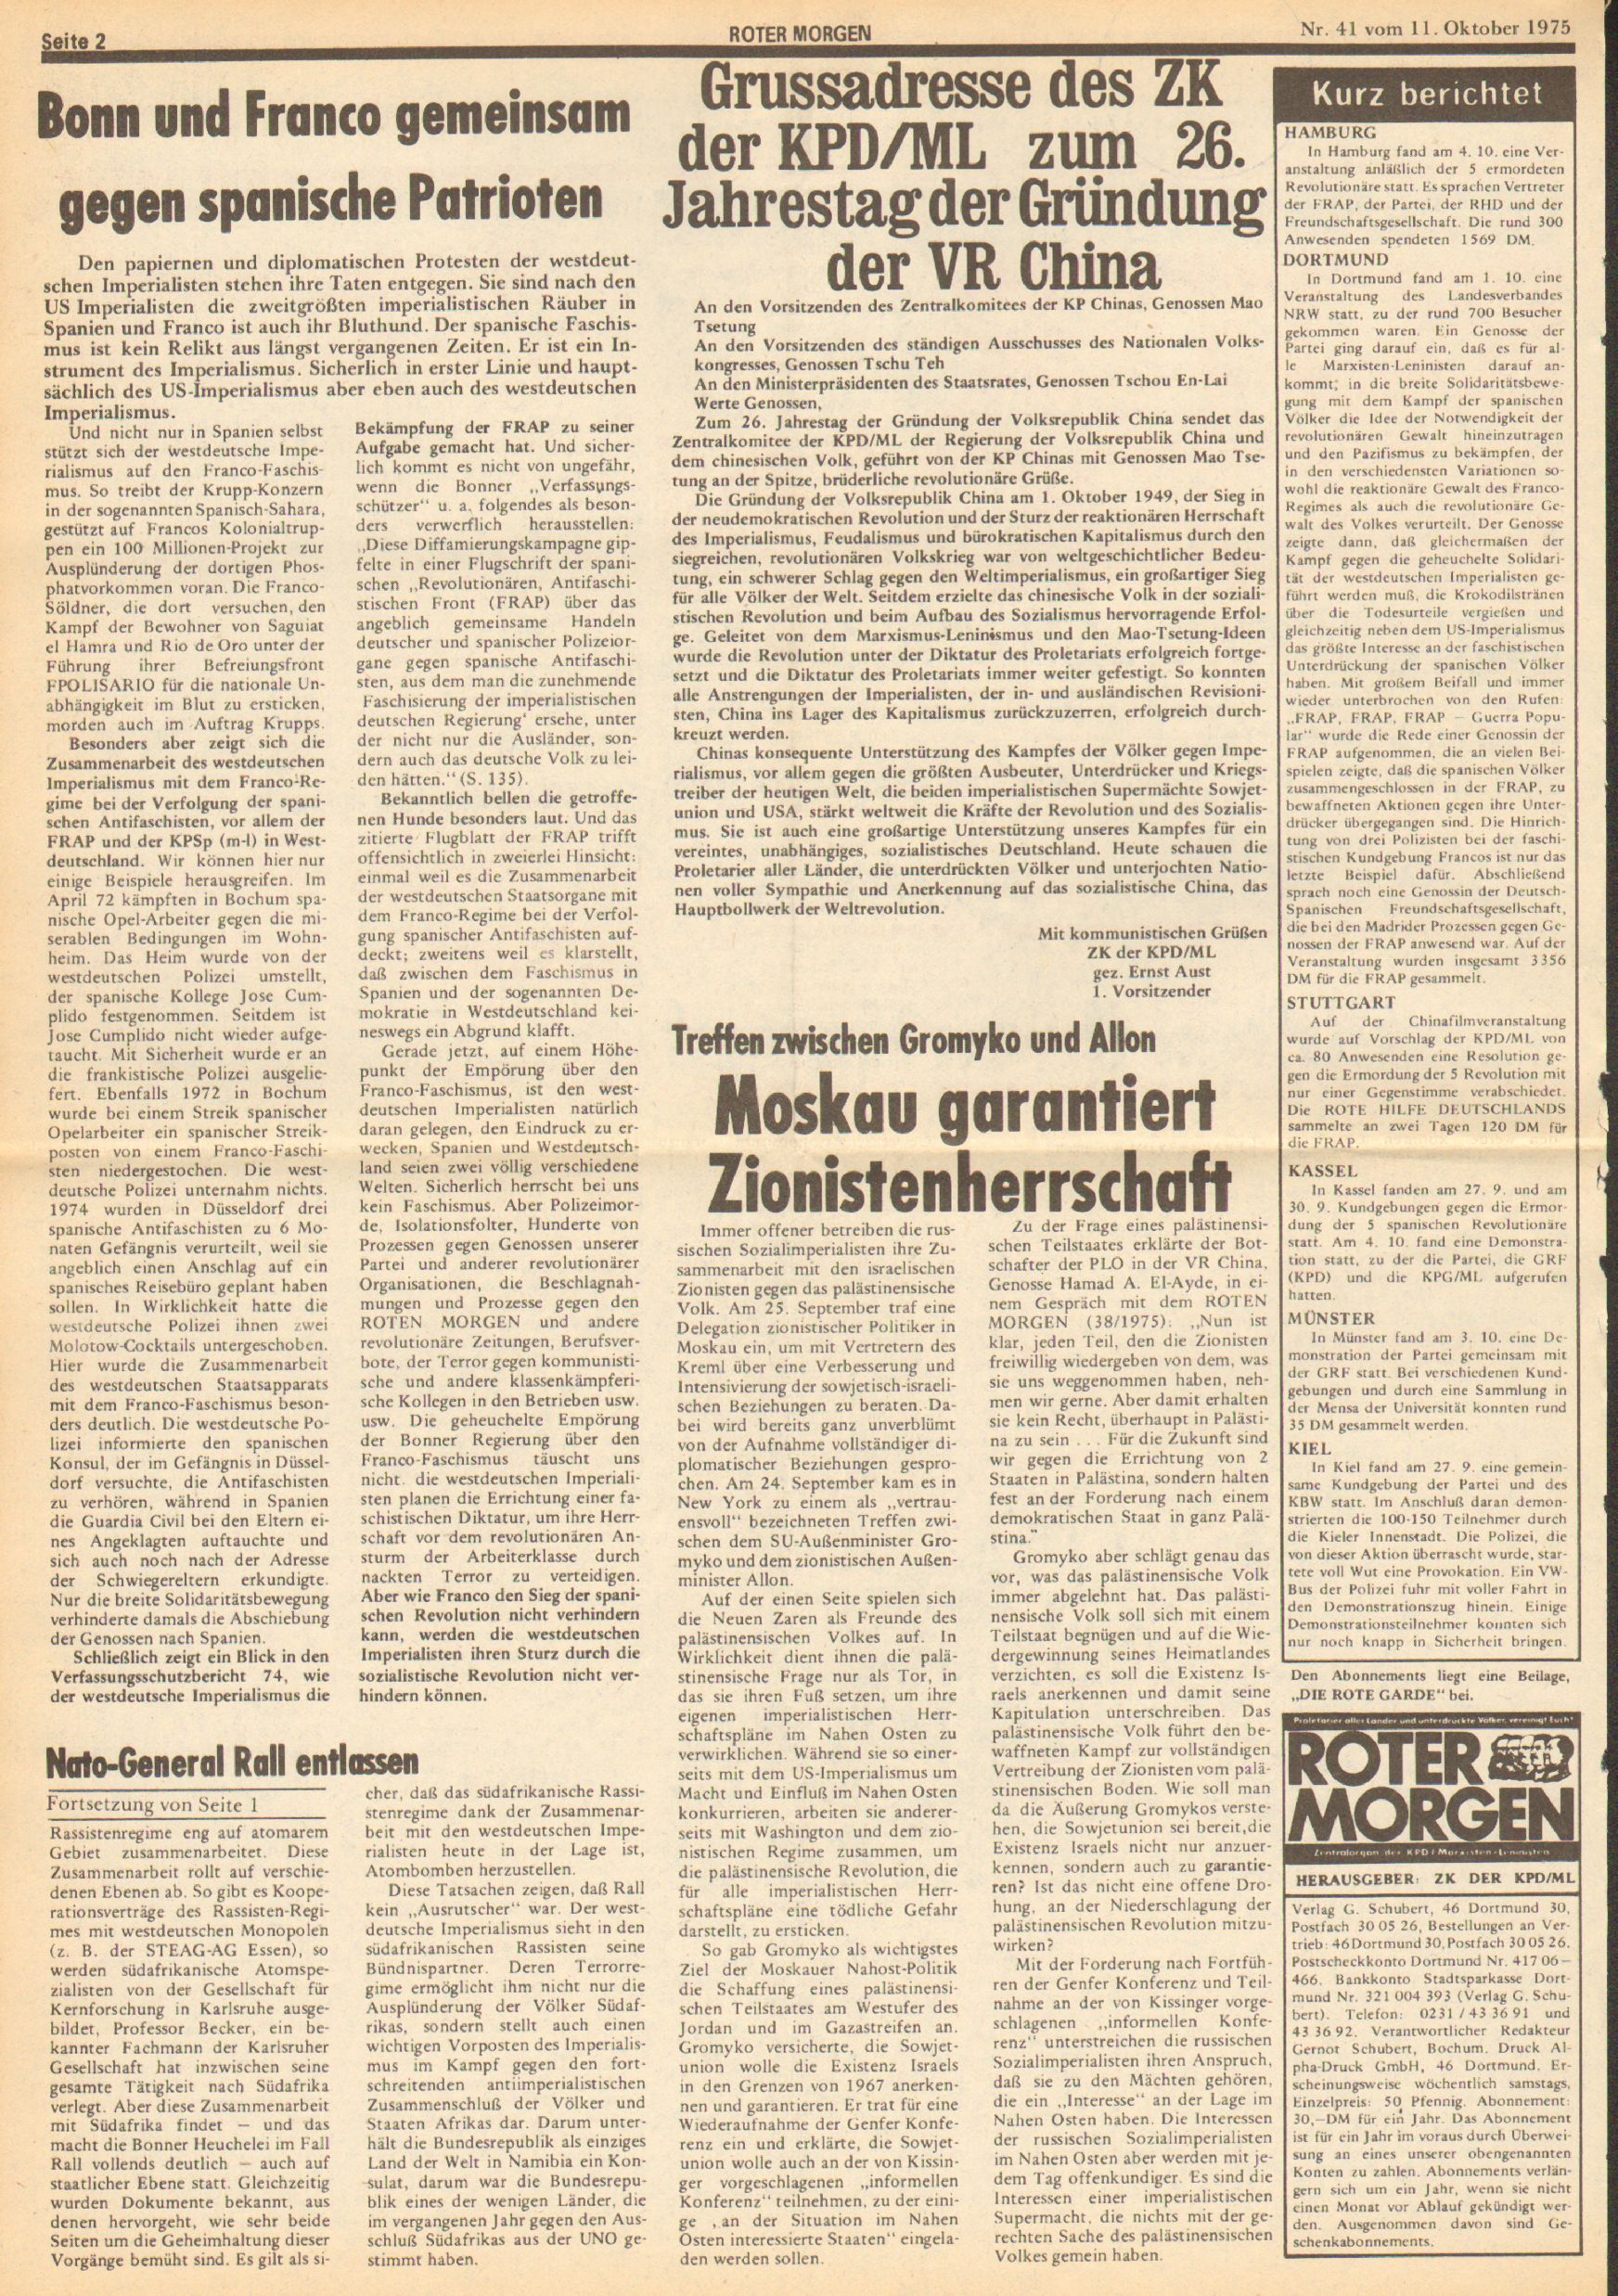 Roter Morgen, 9. Jg., 11. Oktober 1975, Nr. 41, Seite 2